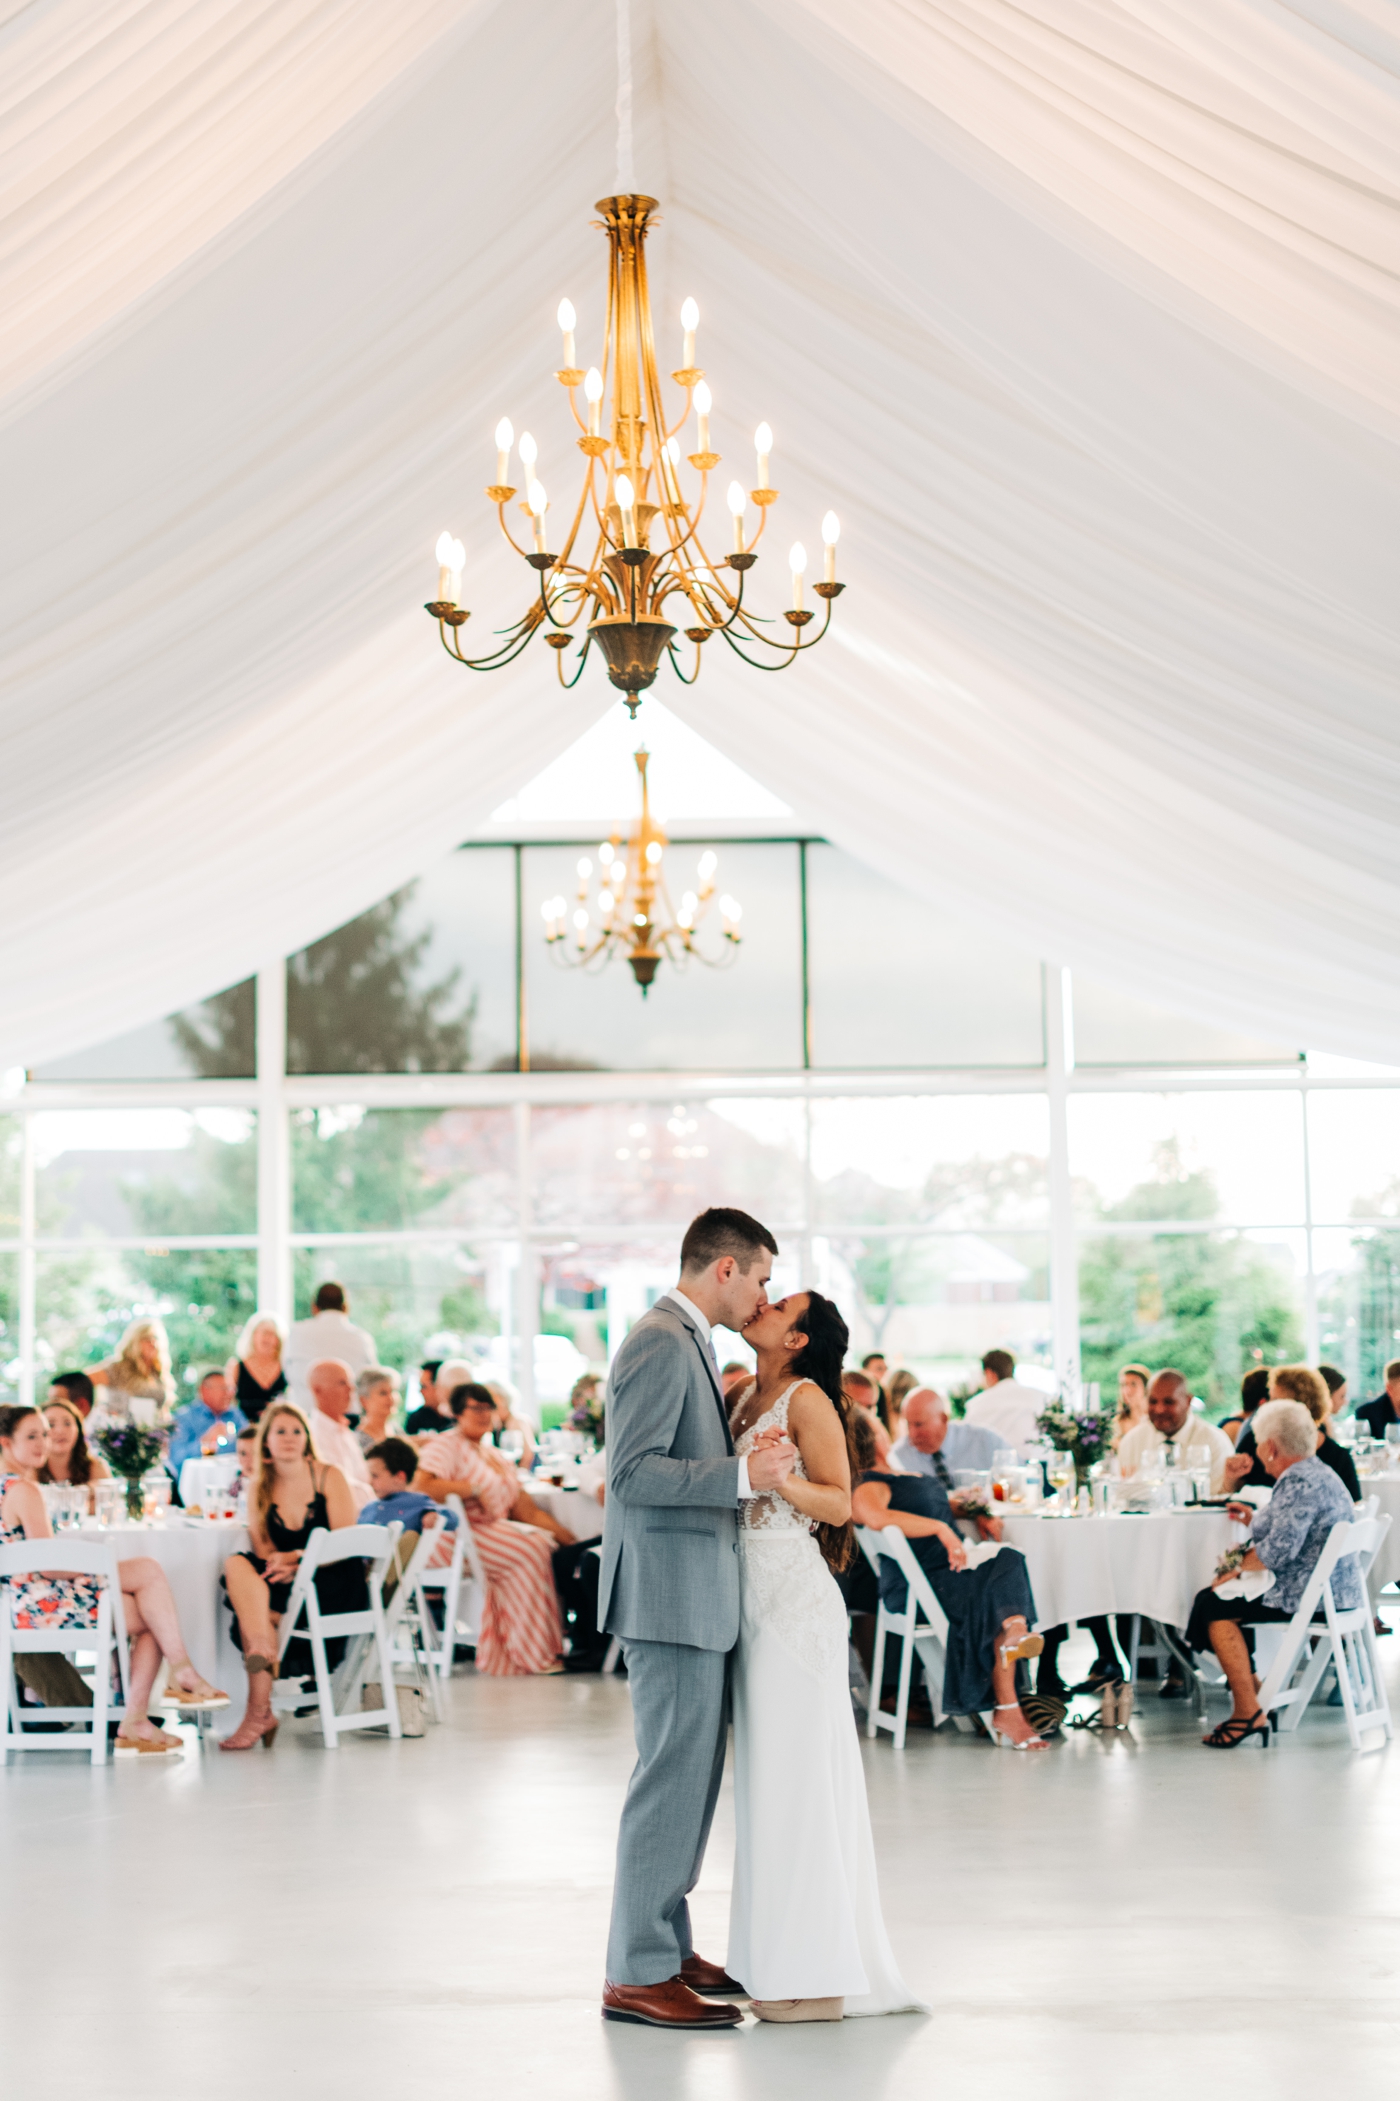 First Dance | Wedding reception at the Ritz Charles Garden Pavillion